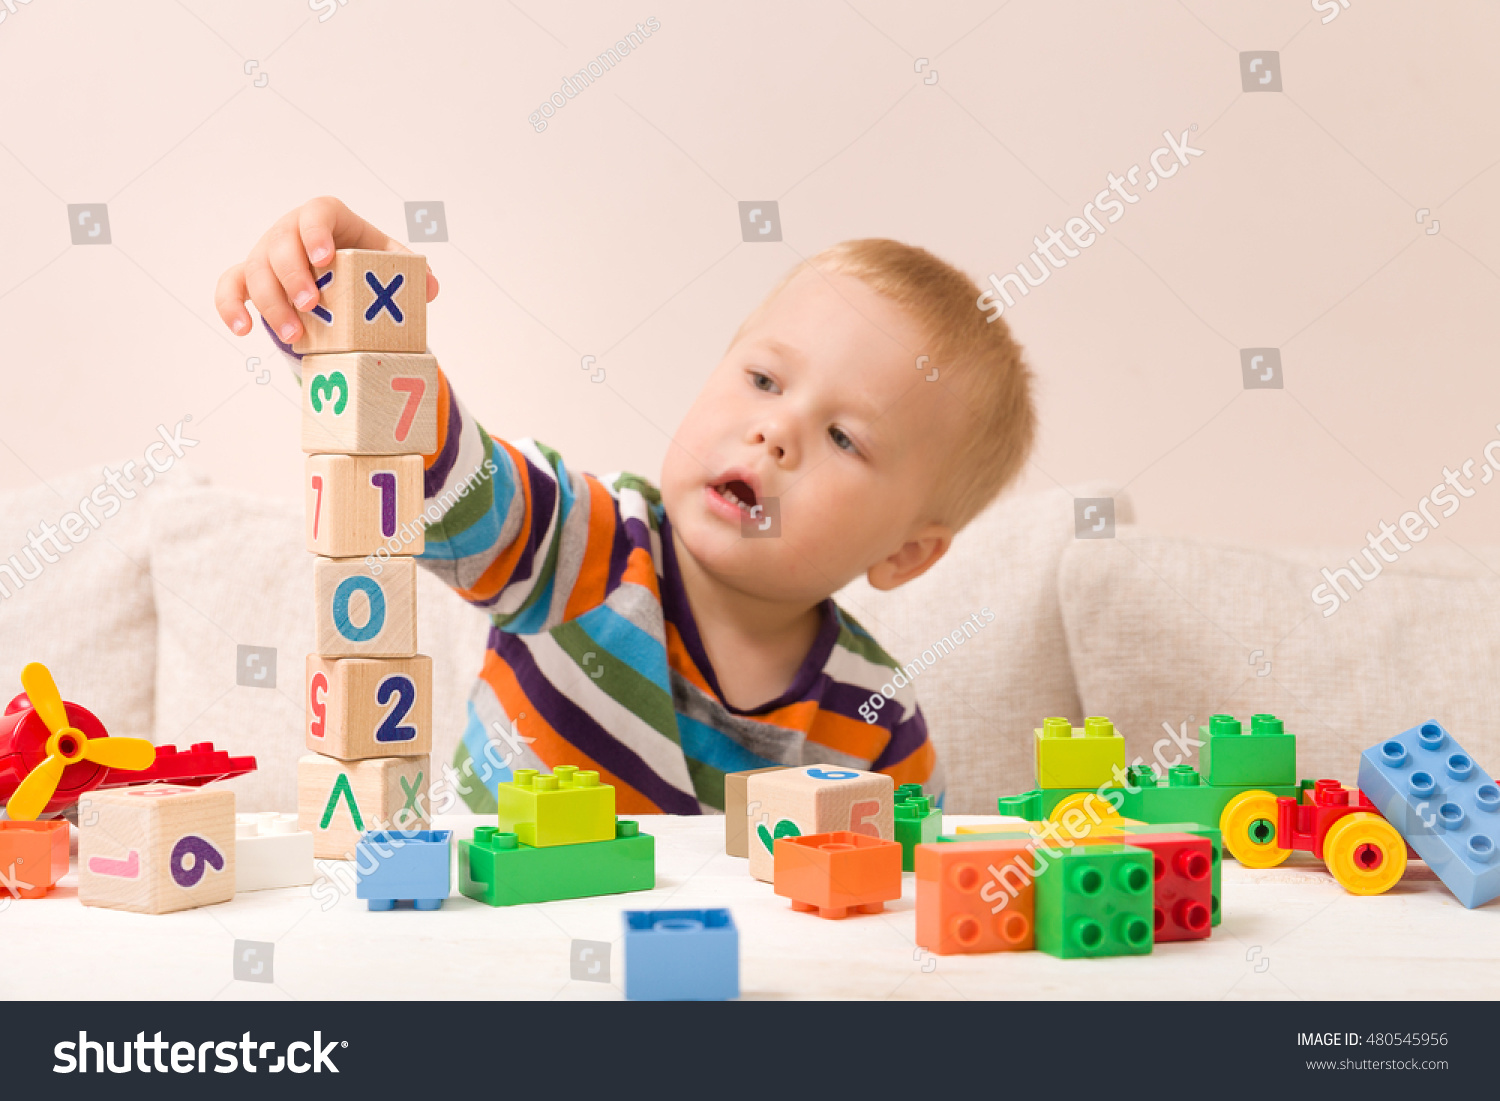 wooden bricks for babies